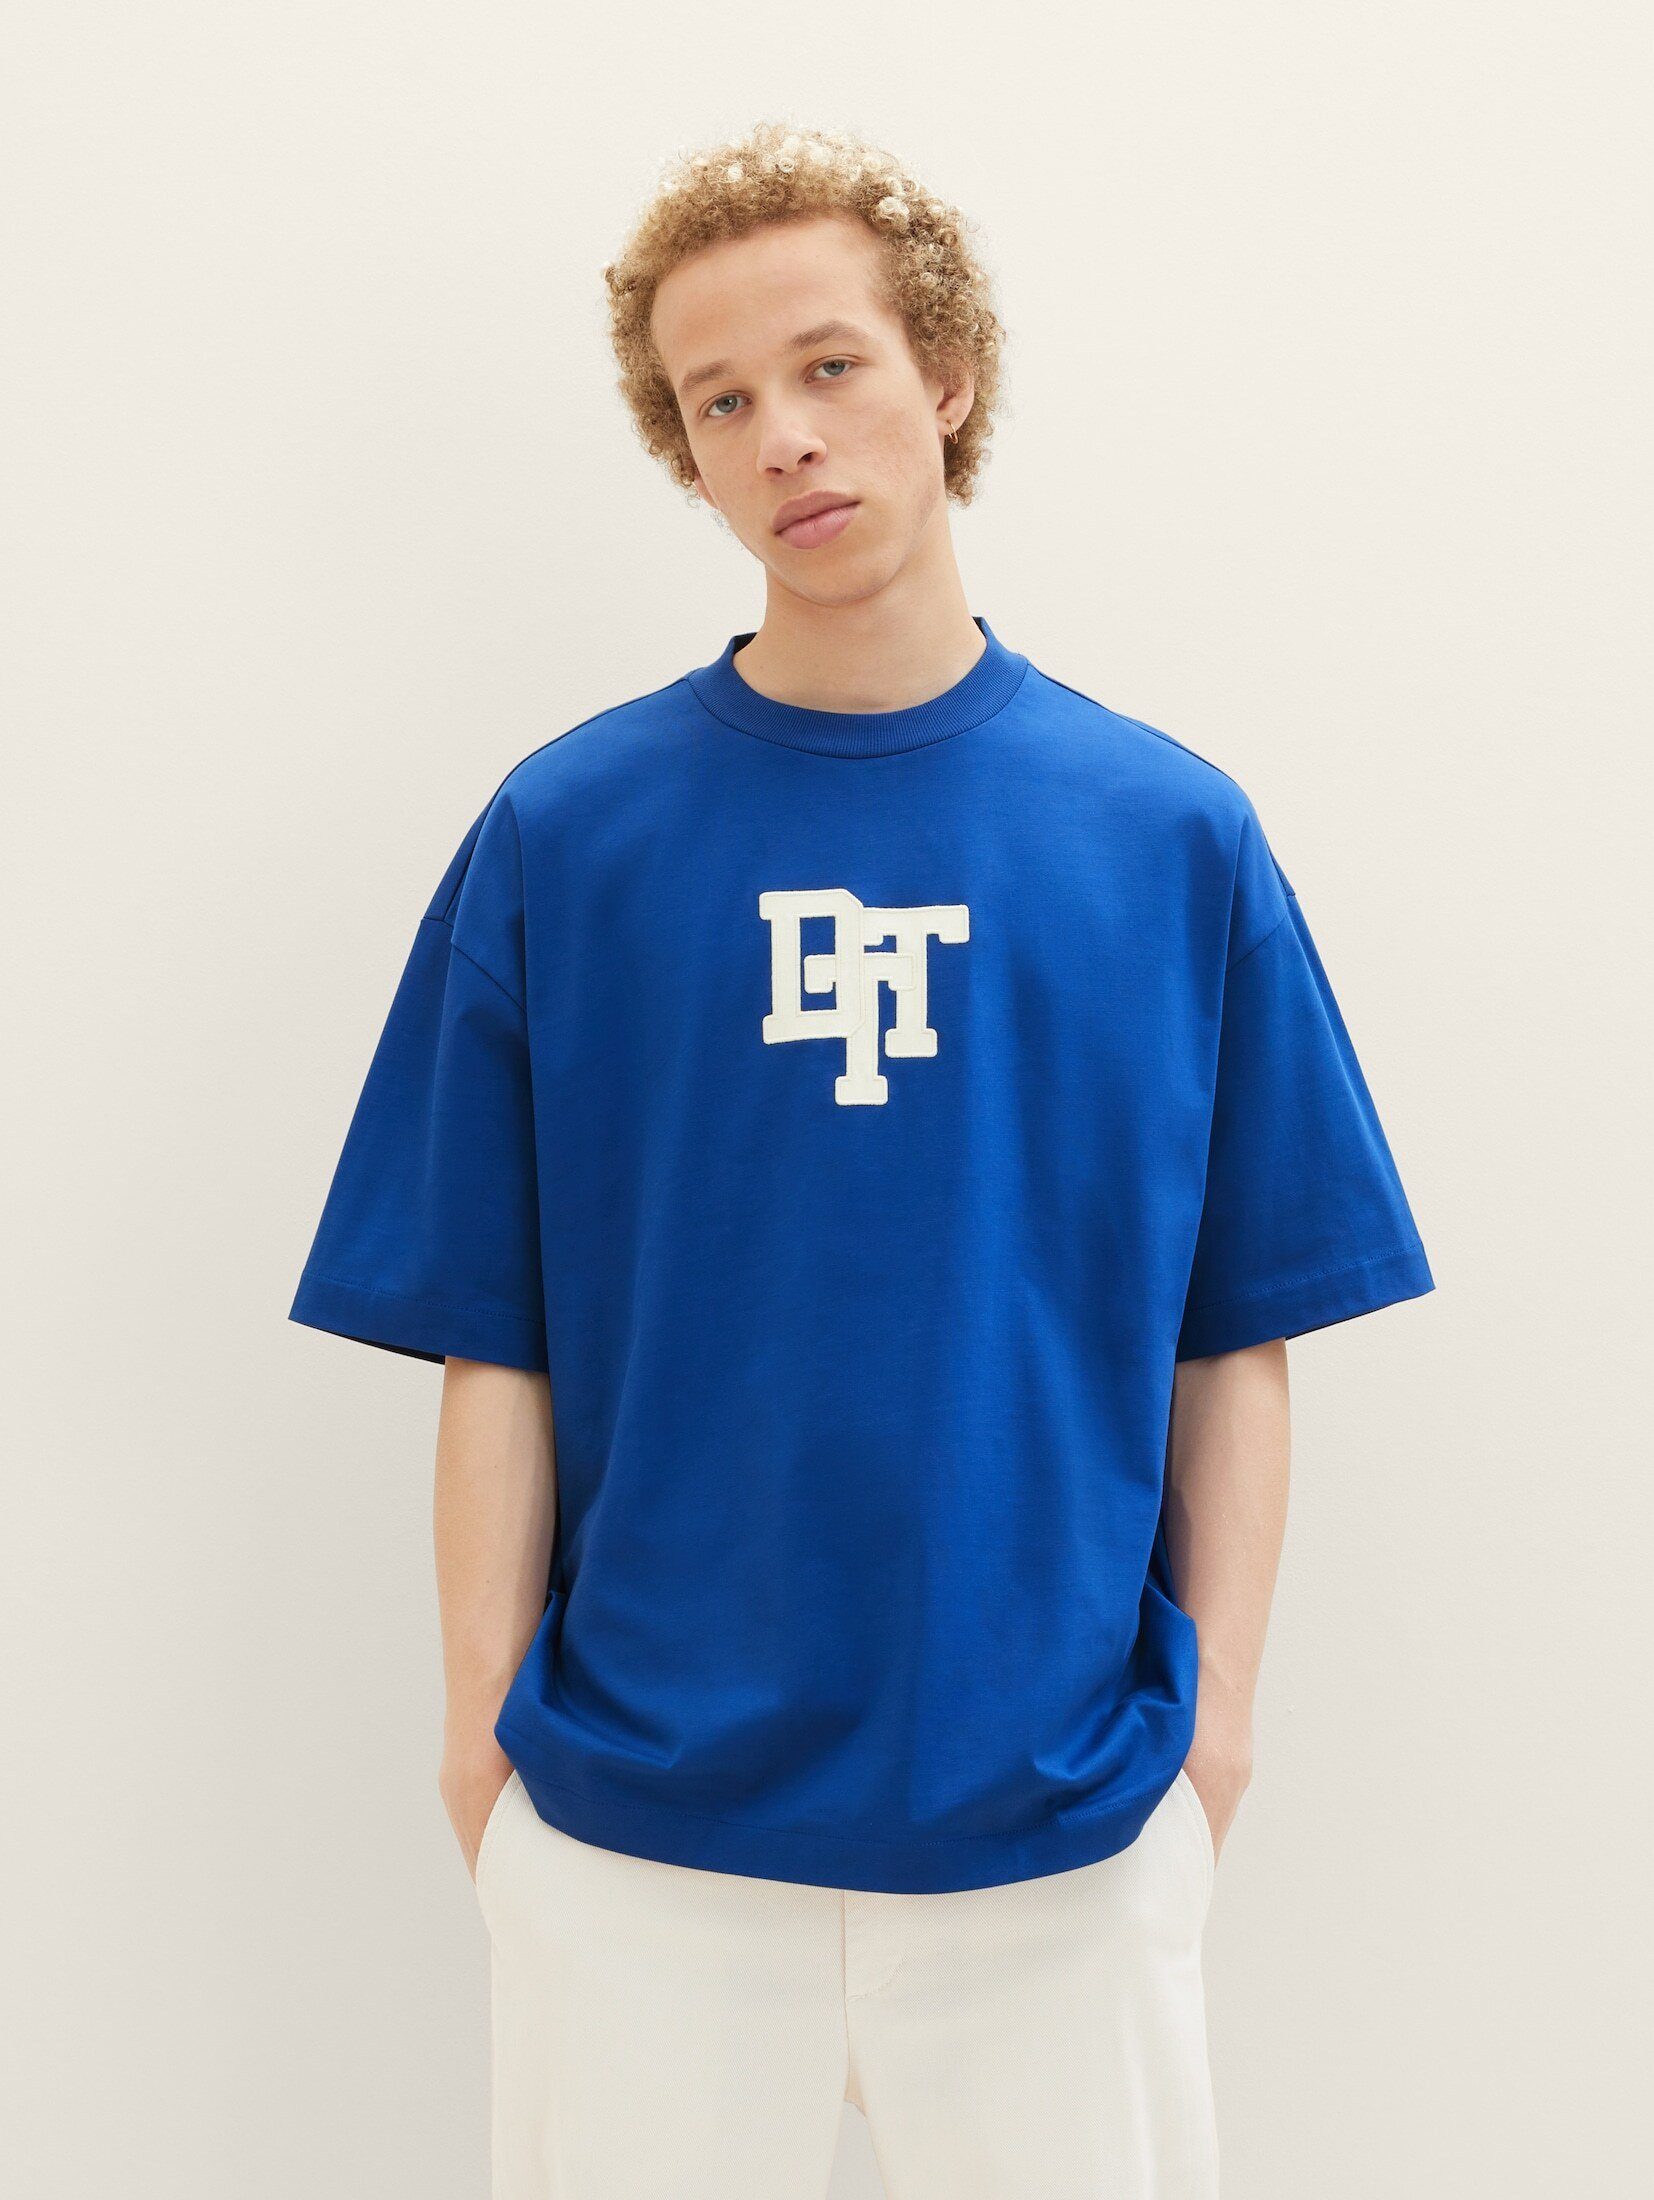 shiny TAILOR Applikation mit Denim blue T-Shirt TOM T-Shirt Oversized royal